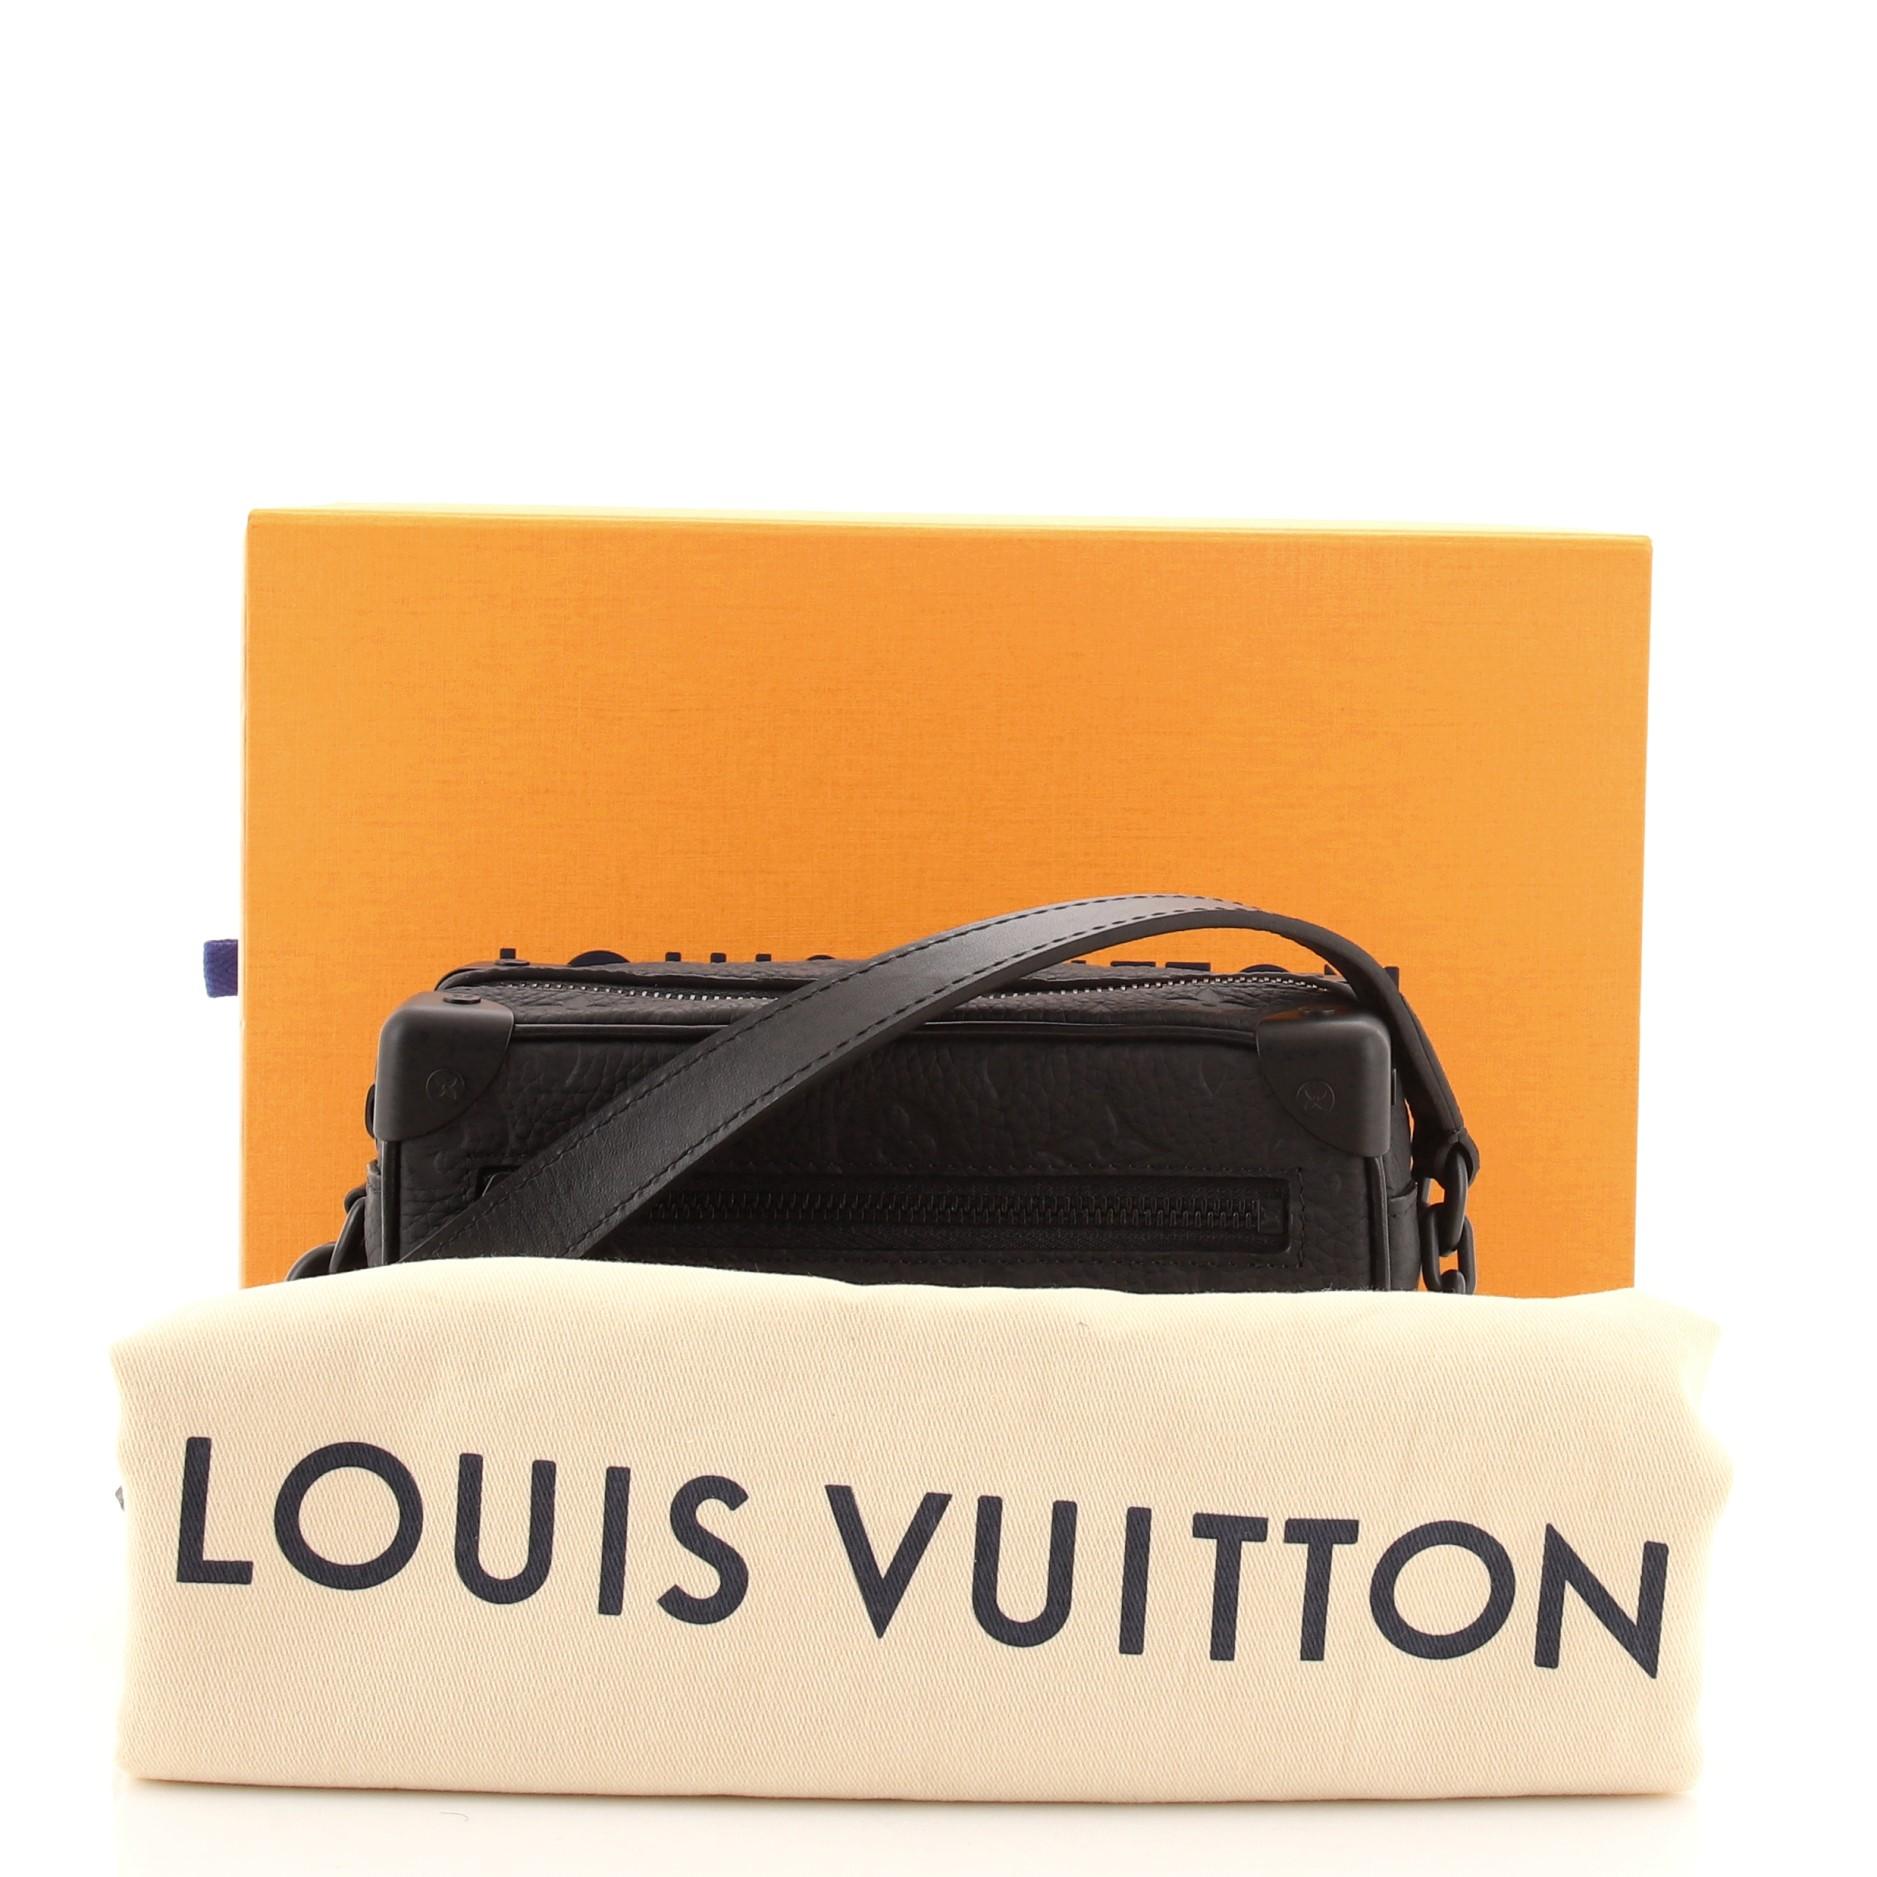 131020 1 Louis Vuitton Soft Trunk Bag Monogram Tau 2D 0003 master